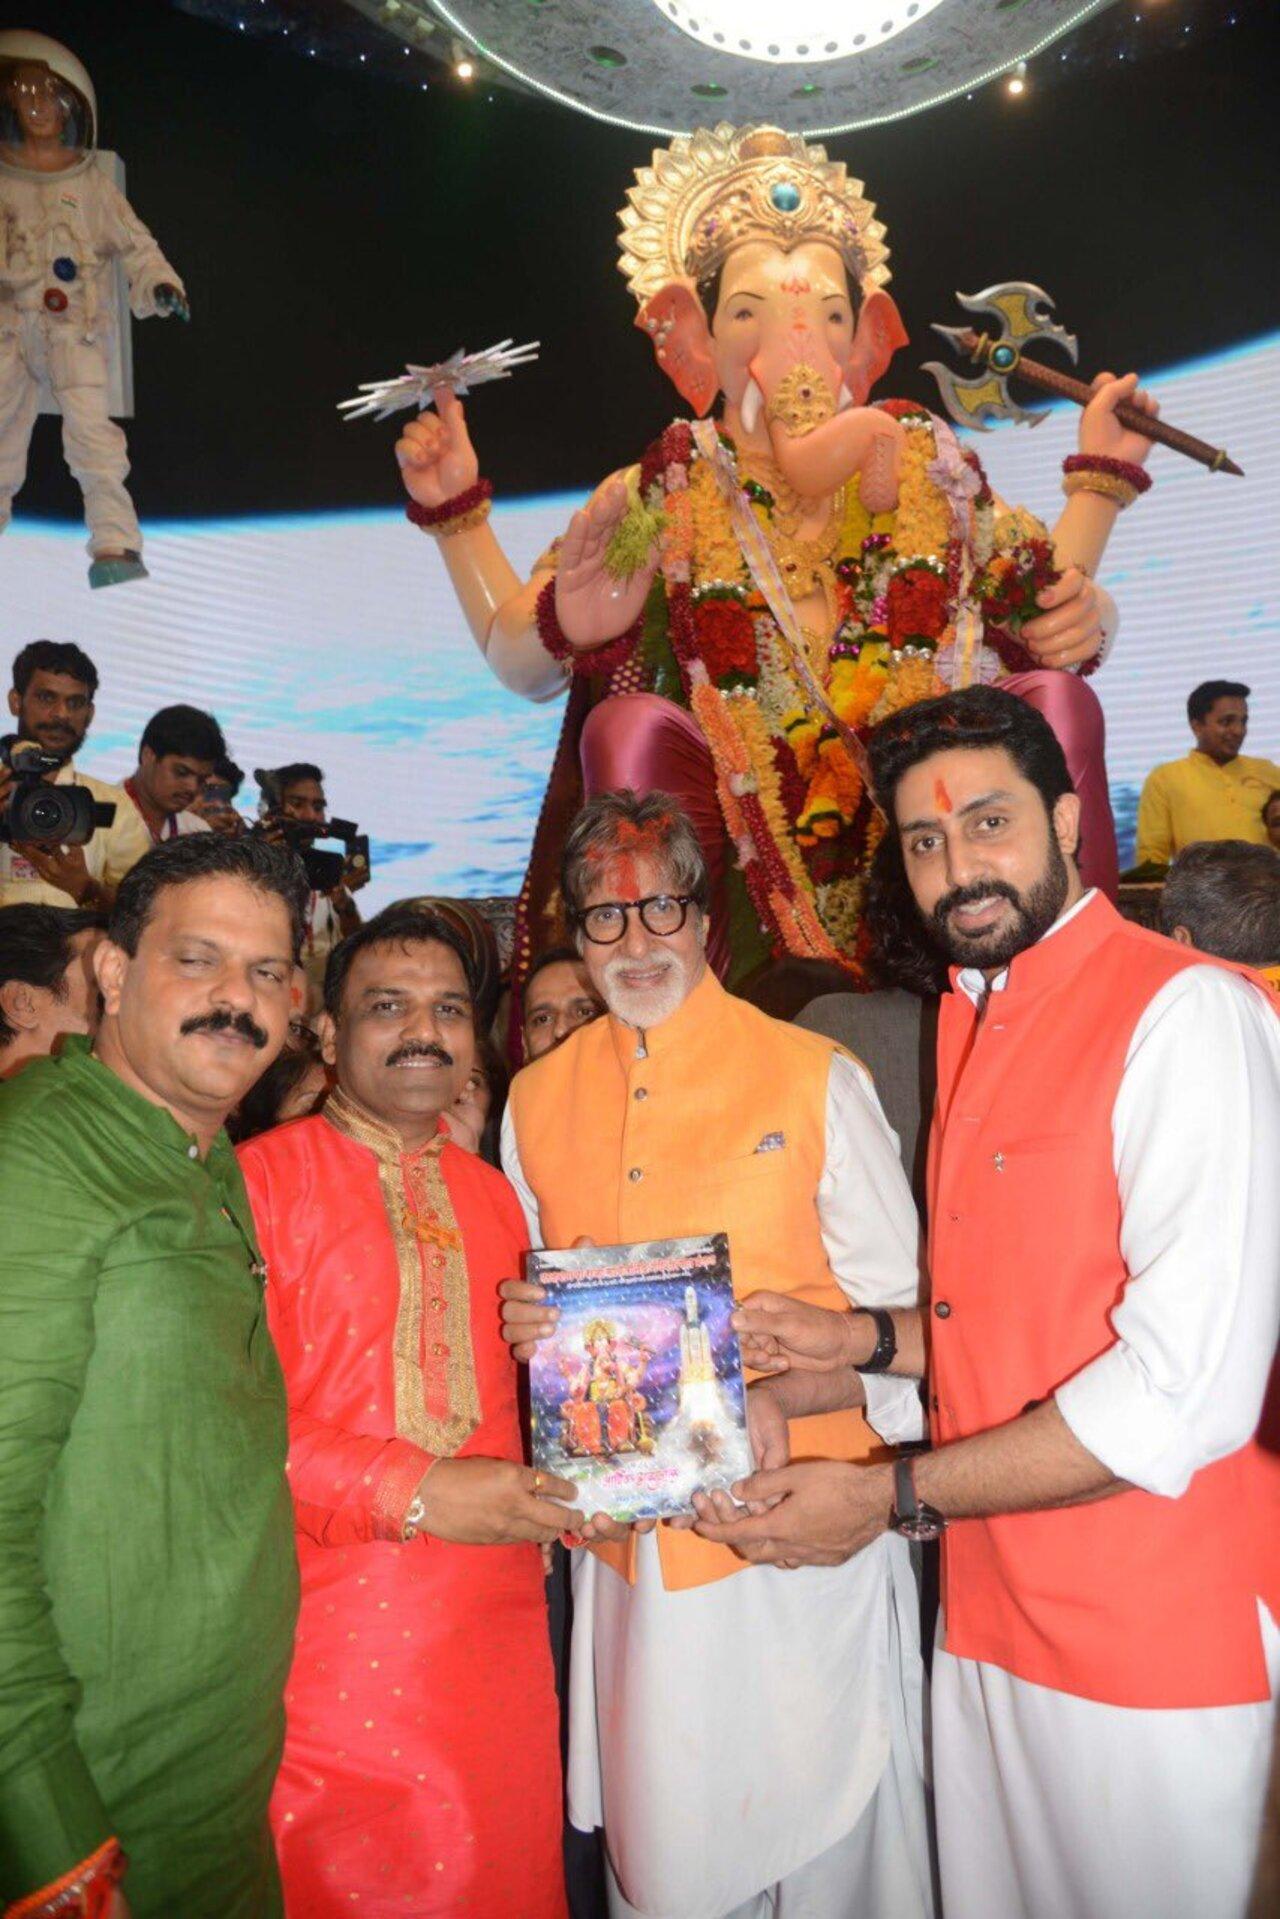 Amitabh Bachchan and Abhishek Bachchan are among the regular visitors at Lalbaugcha Raja during Ganesh Chaturthi